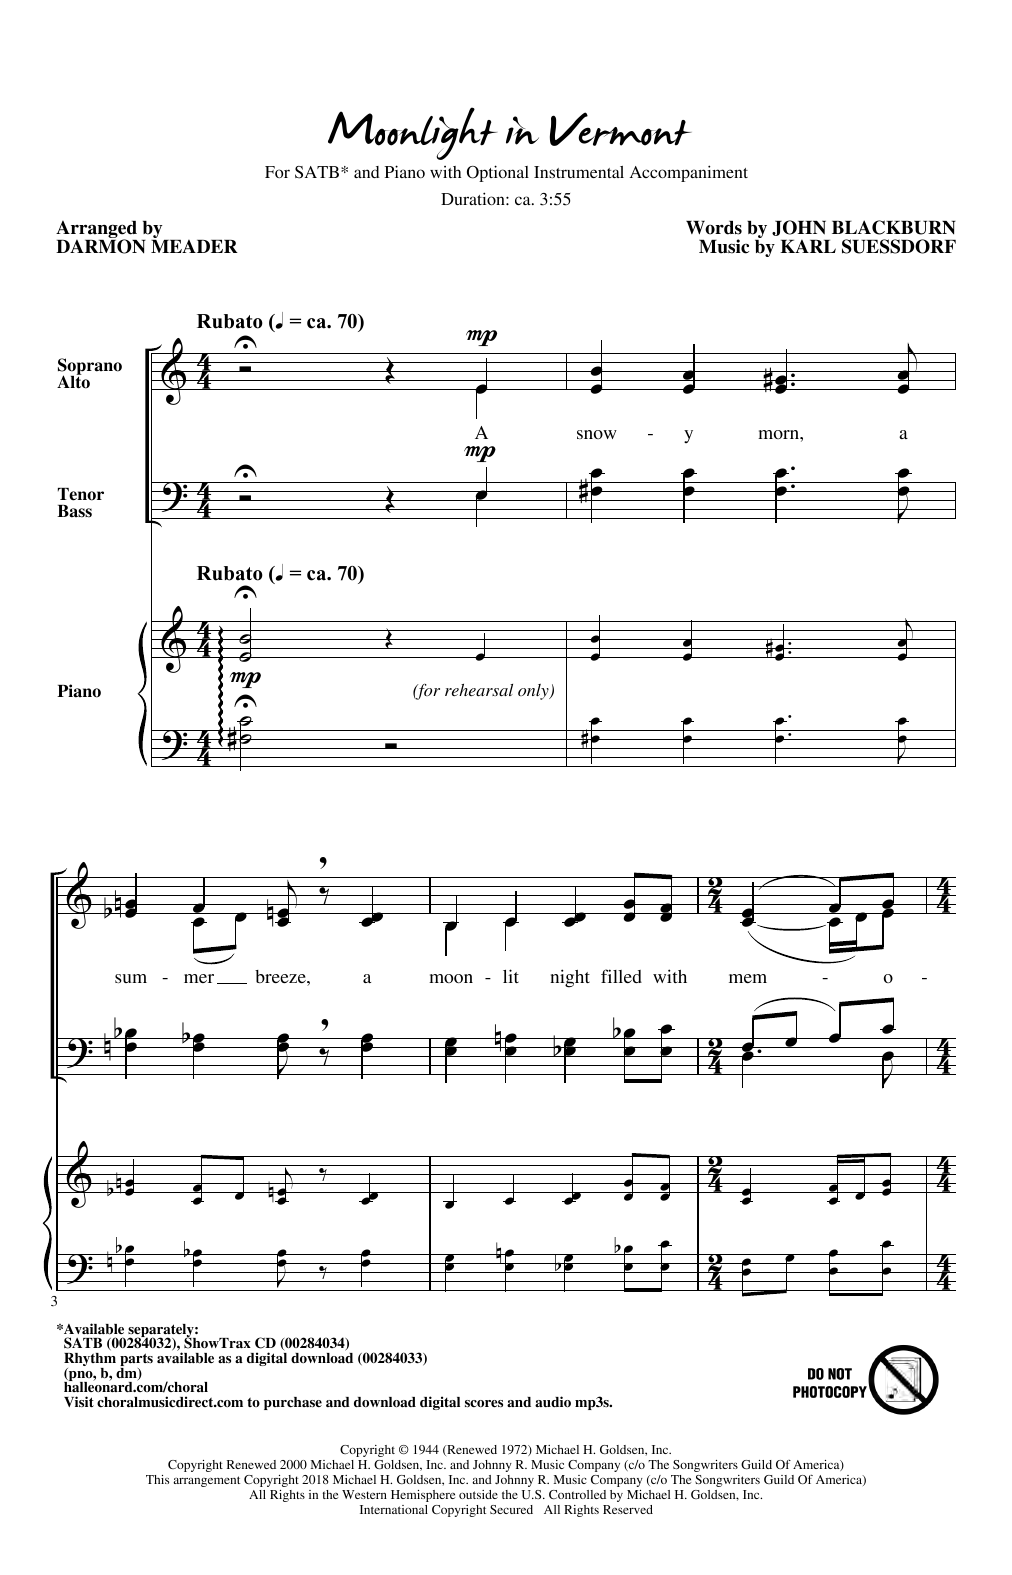 John Blackburn & Karl Suessdorf Moonlight in Vermont (arr. Darmon Meader) sheet music notes and chords arranged for SATB Choir